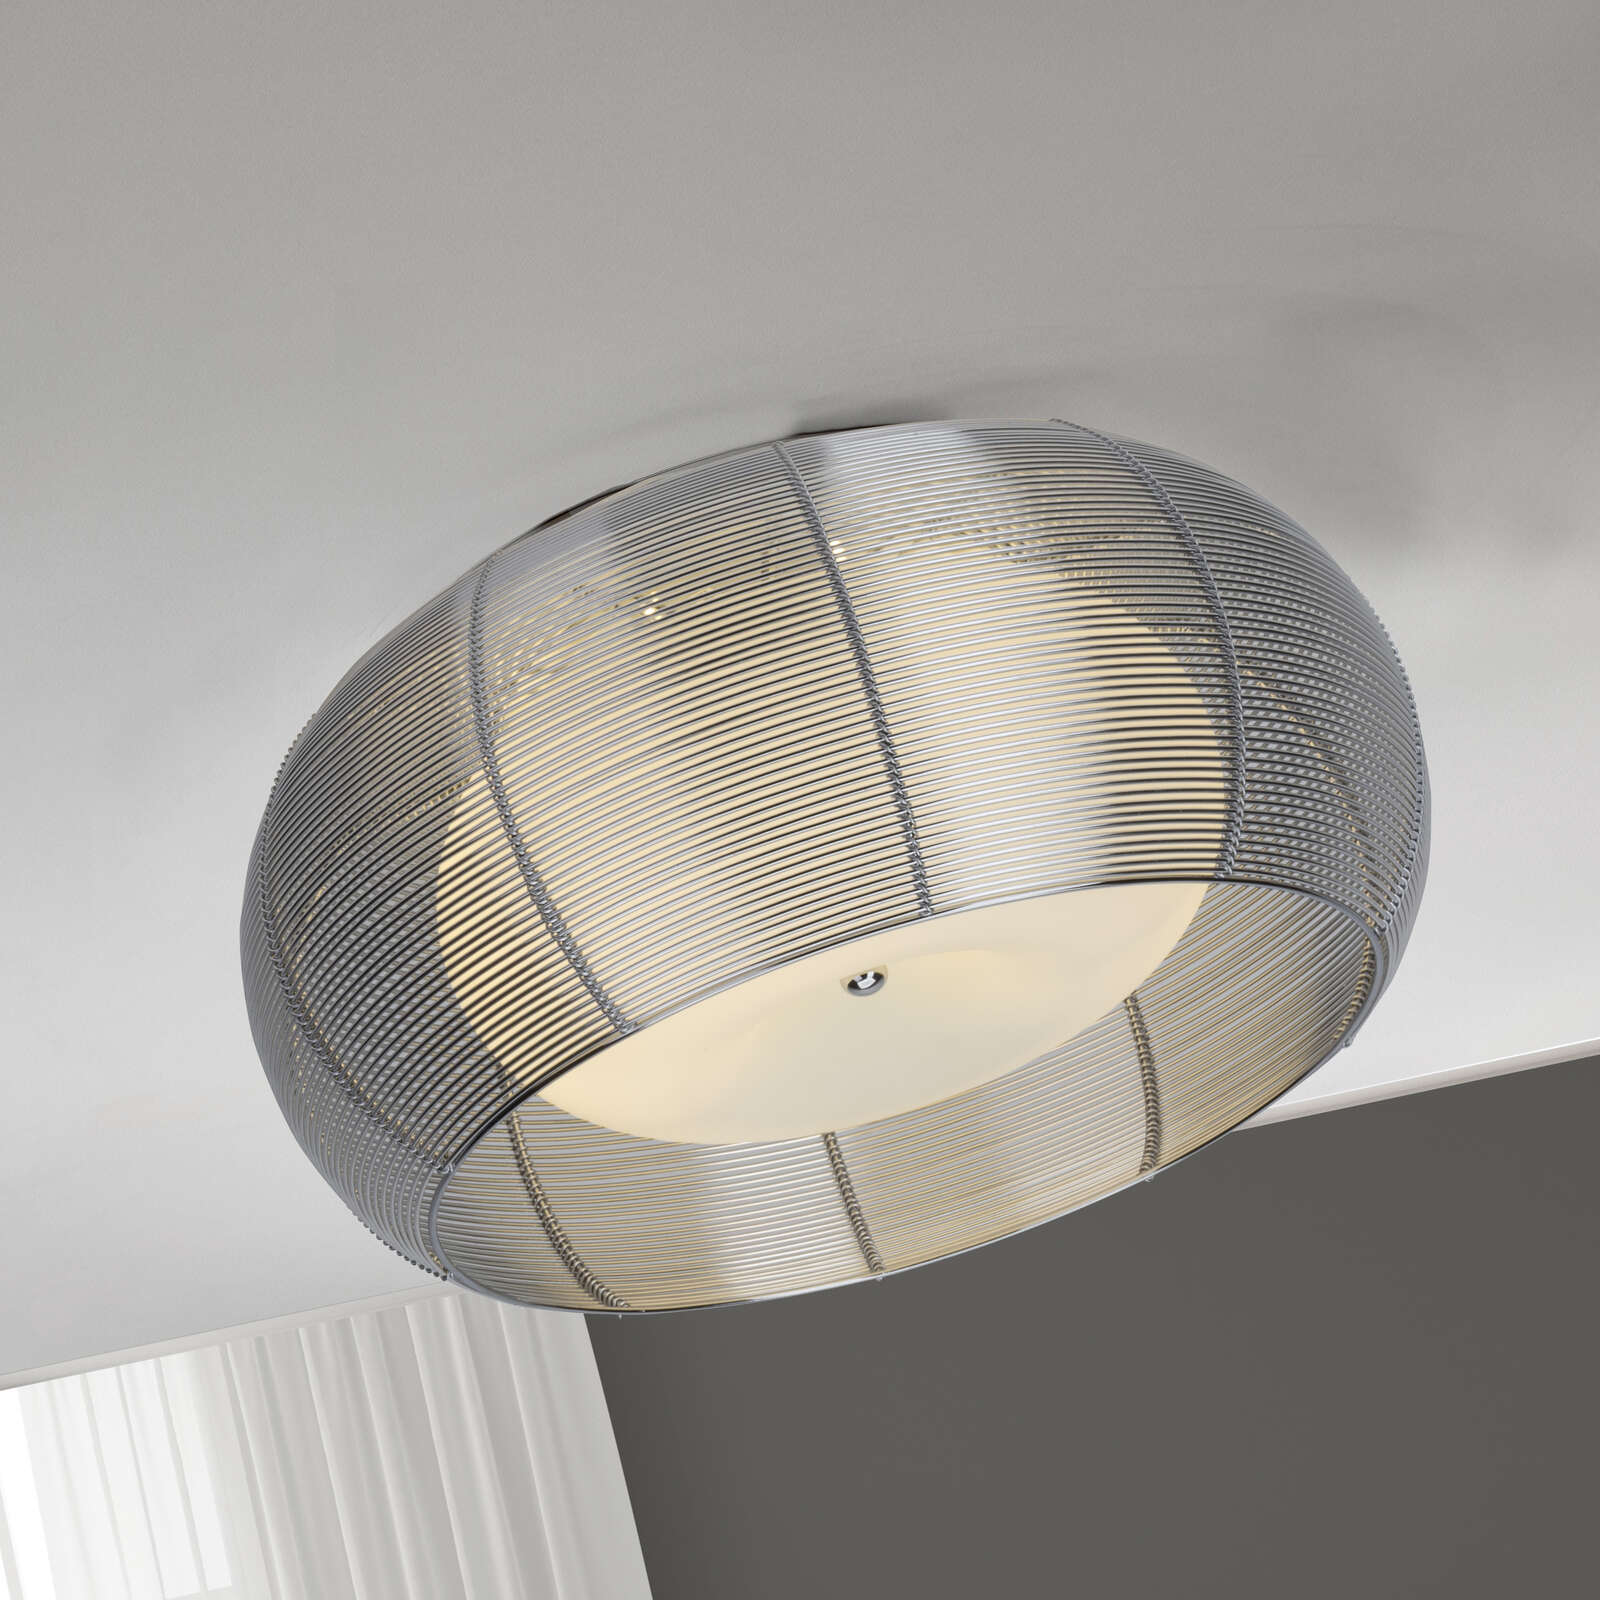             Glazen plafondlamp - Maxime 9 - Metallic
        